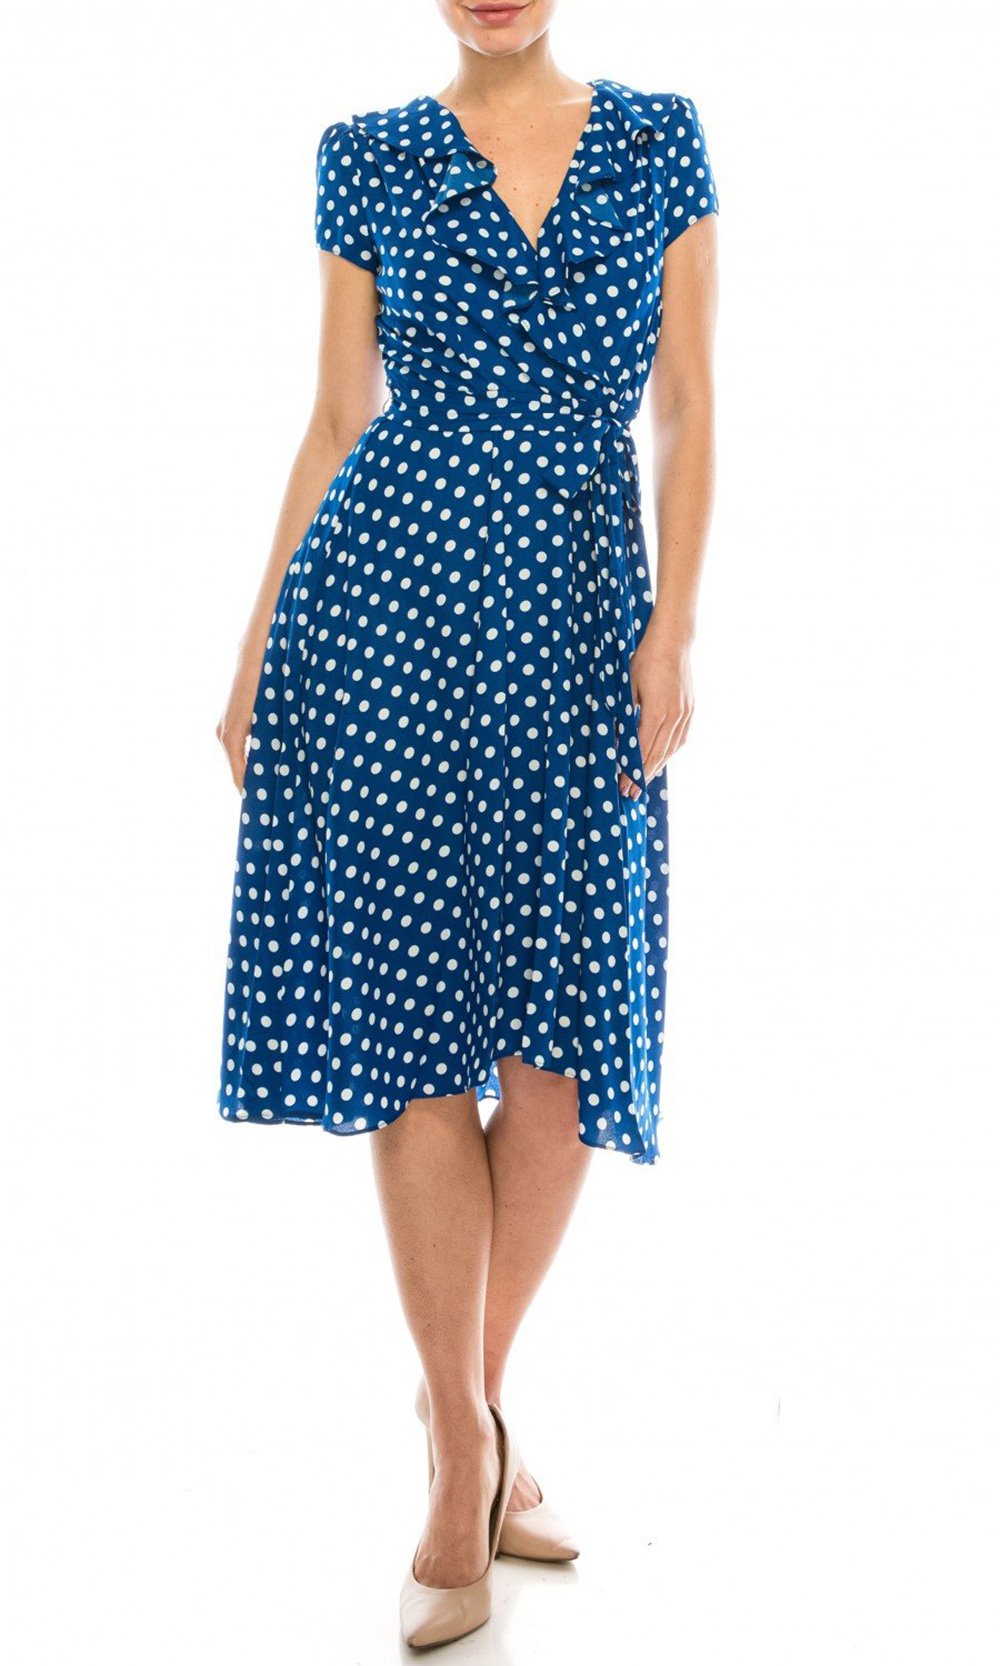 Gabby Skye - 57538MG Polka Dot Ruffle Neckline Faux Wrap Dress In Blue and White